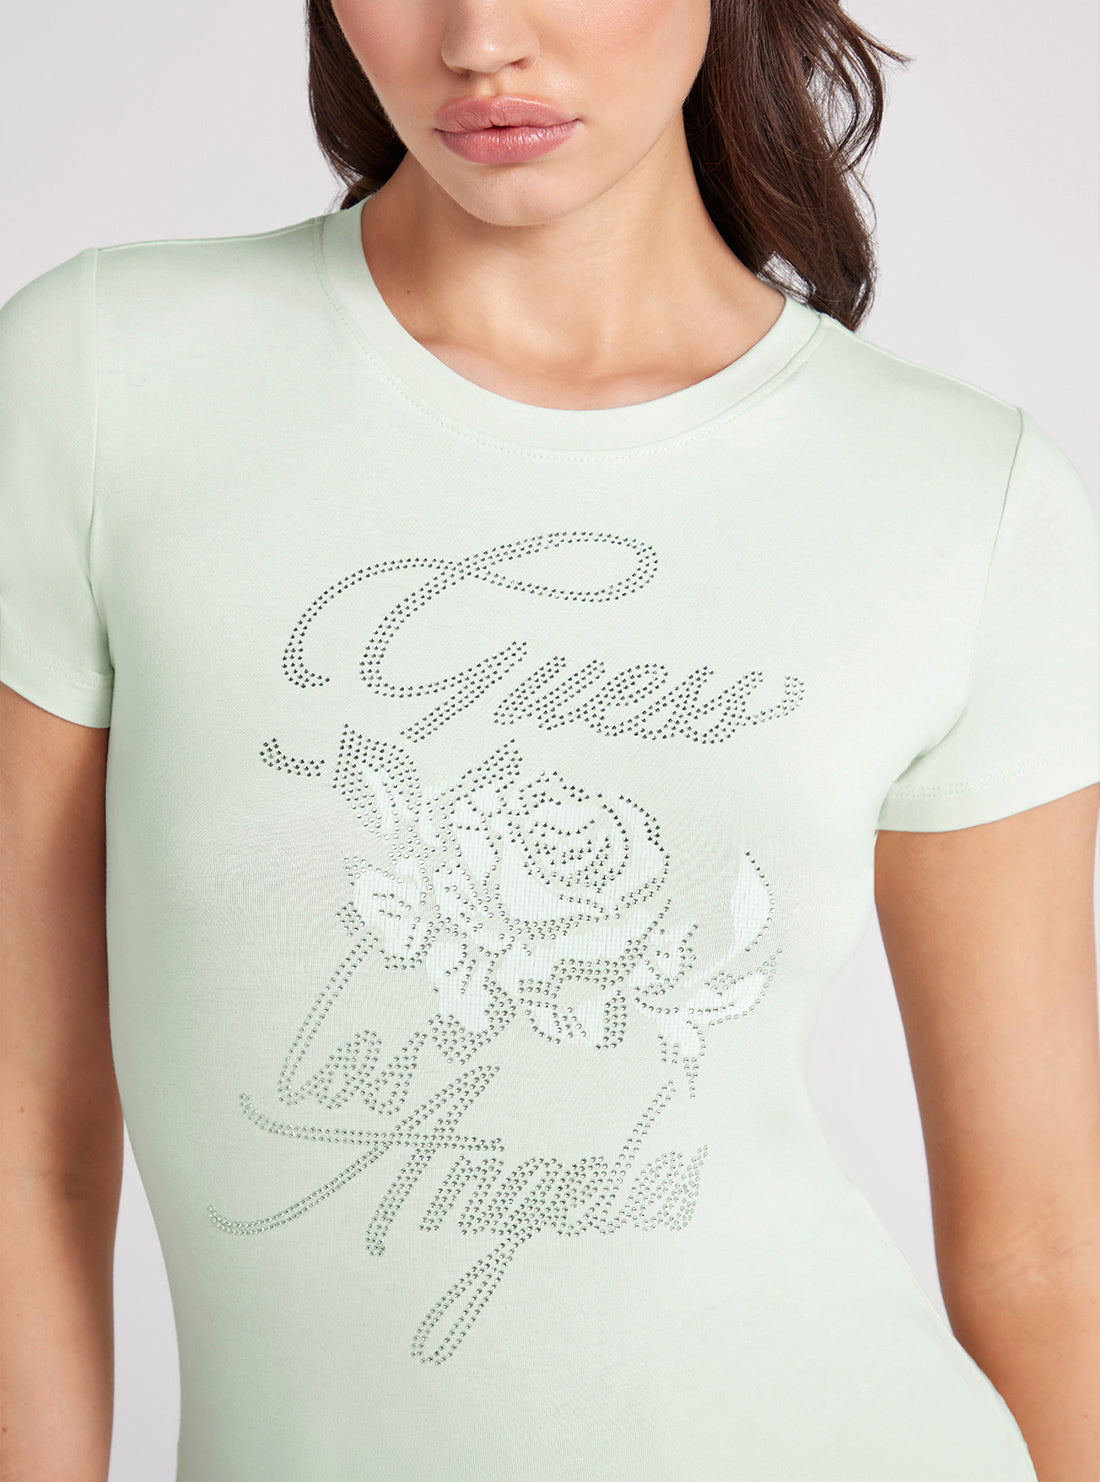 Mint Green Rhinestone Rose T-Shirt | GUESS Women's Apparel | detail view